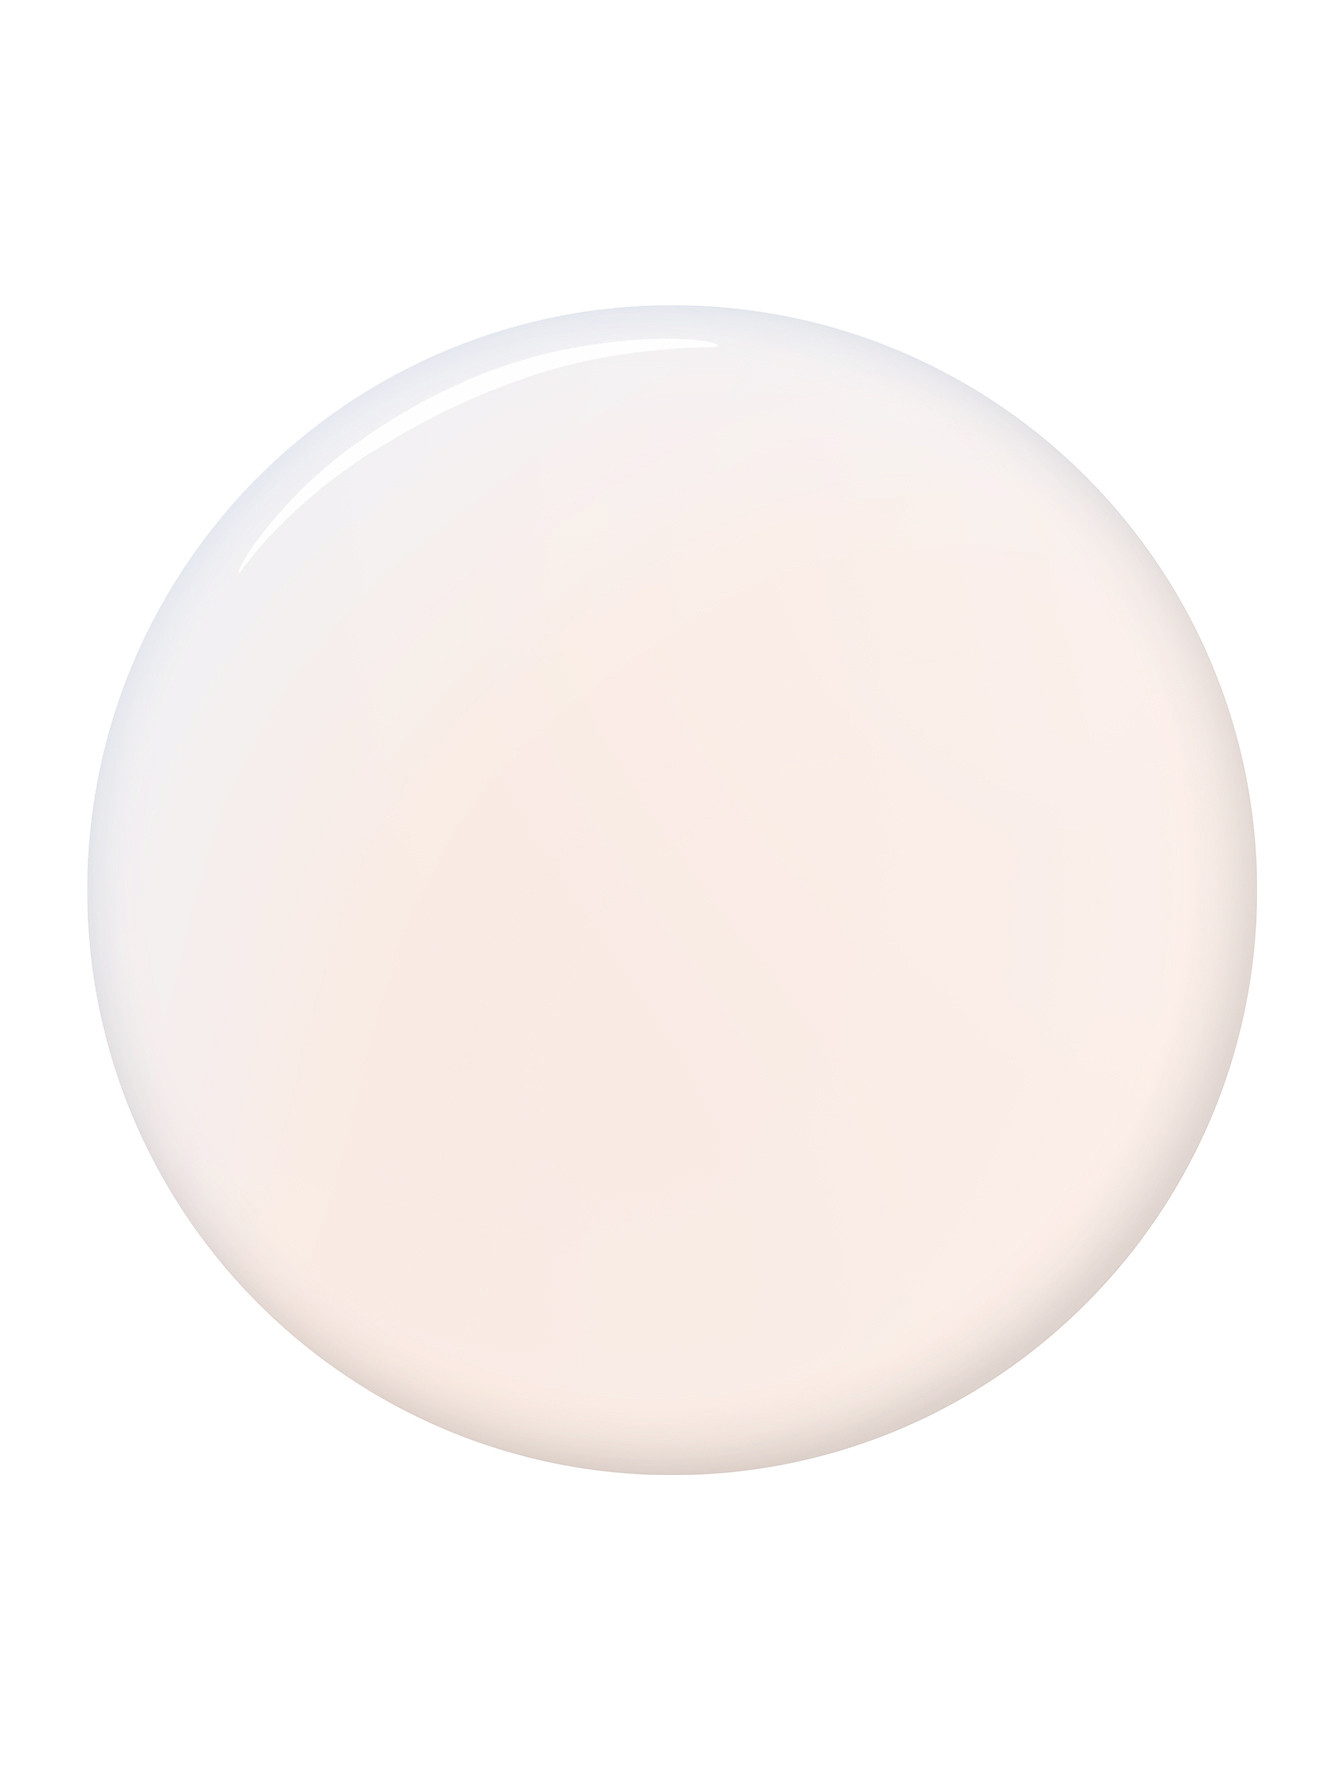 Лак peace - Opalescent Pink + bond-подготовка, Nail Care, 12+9ml - Обтравка1